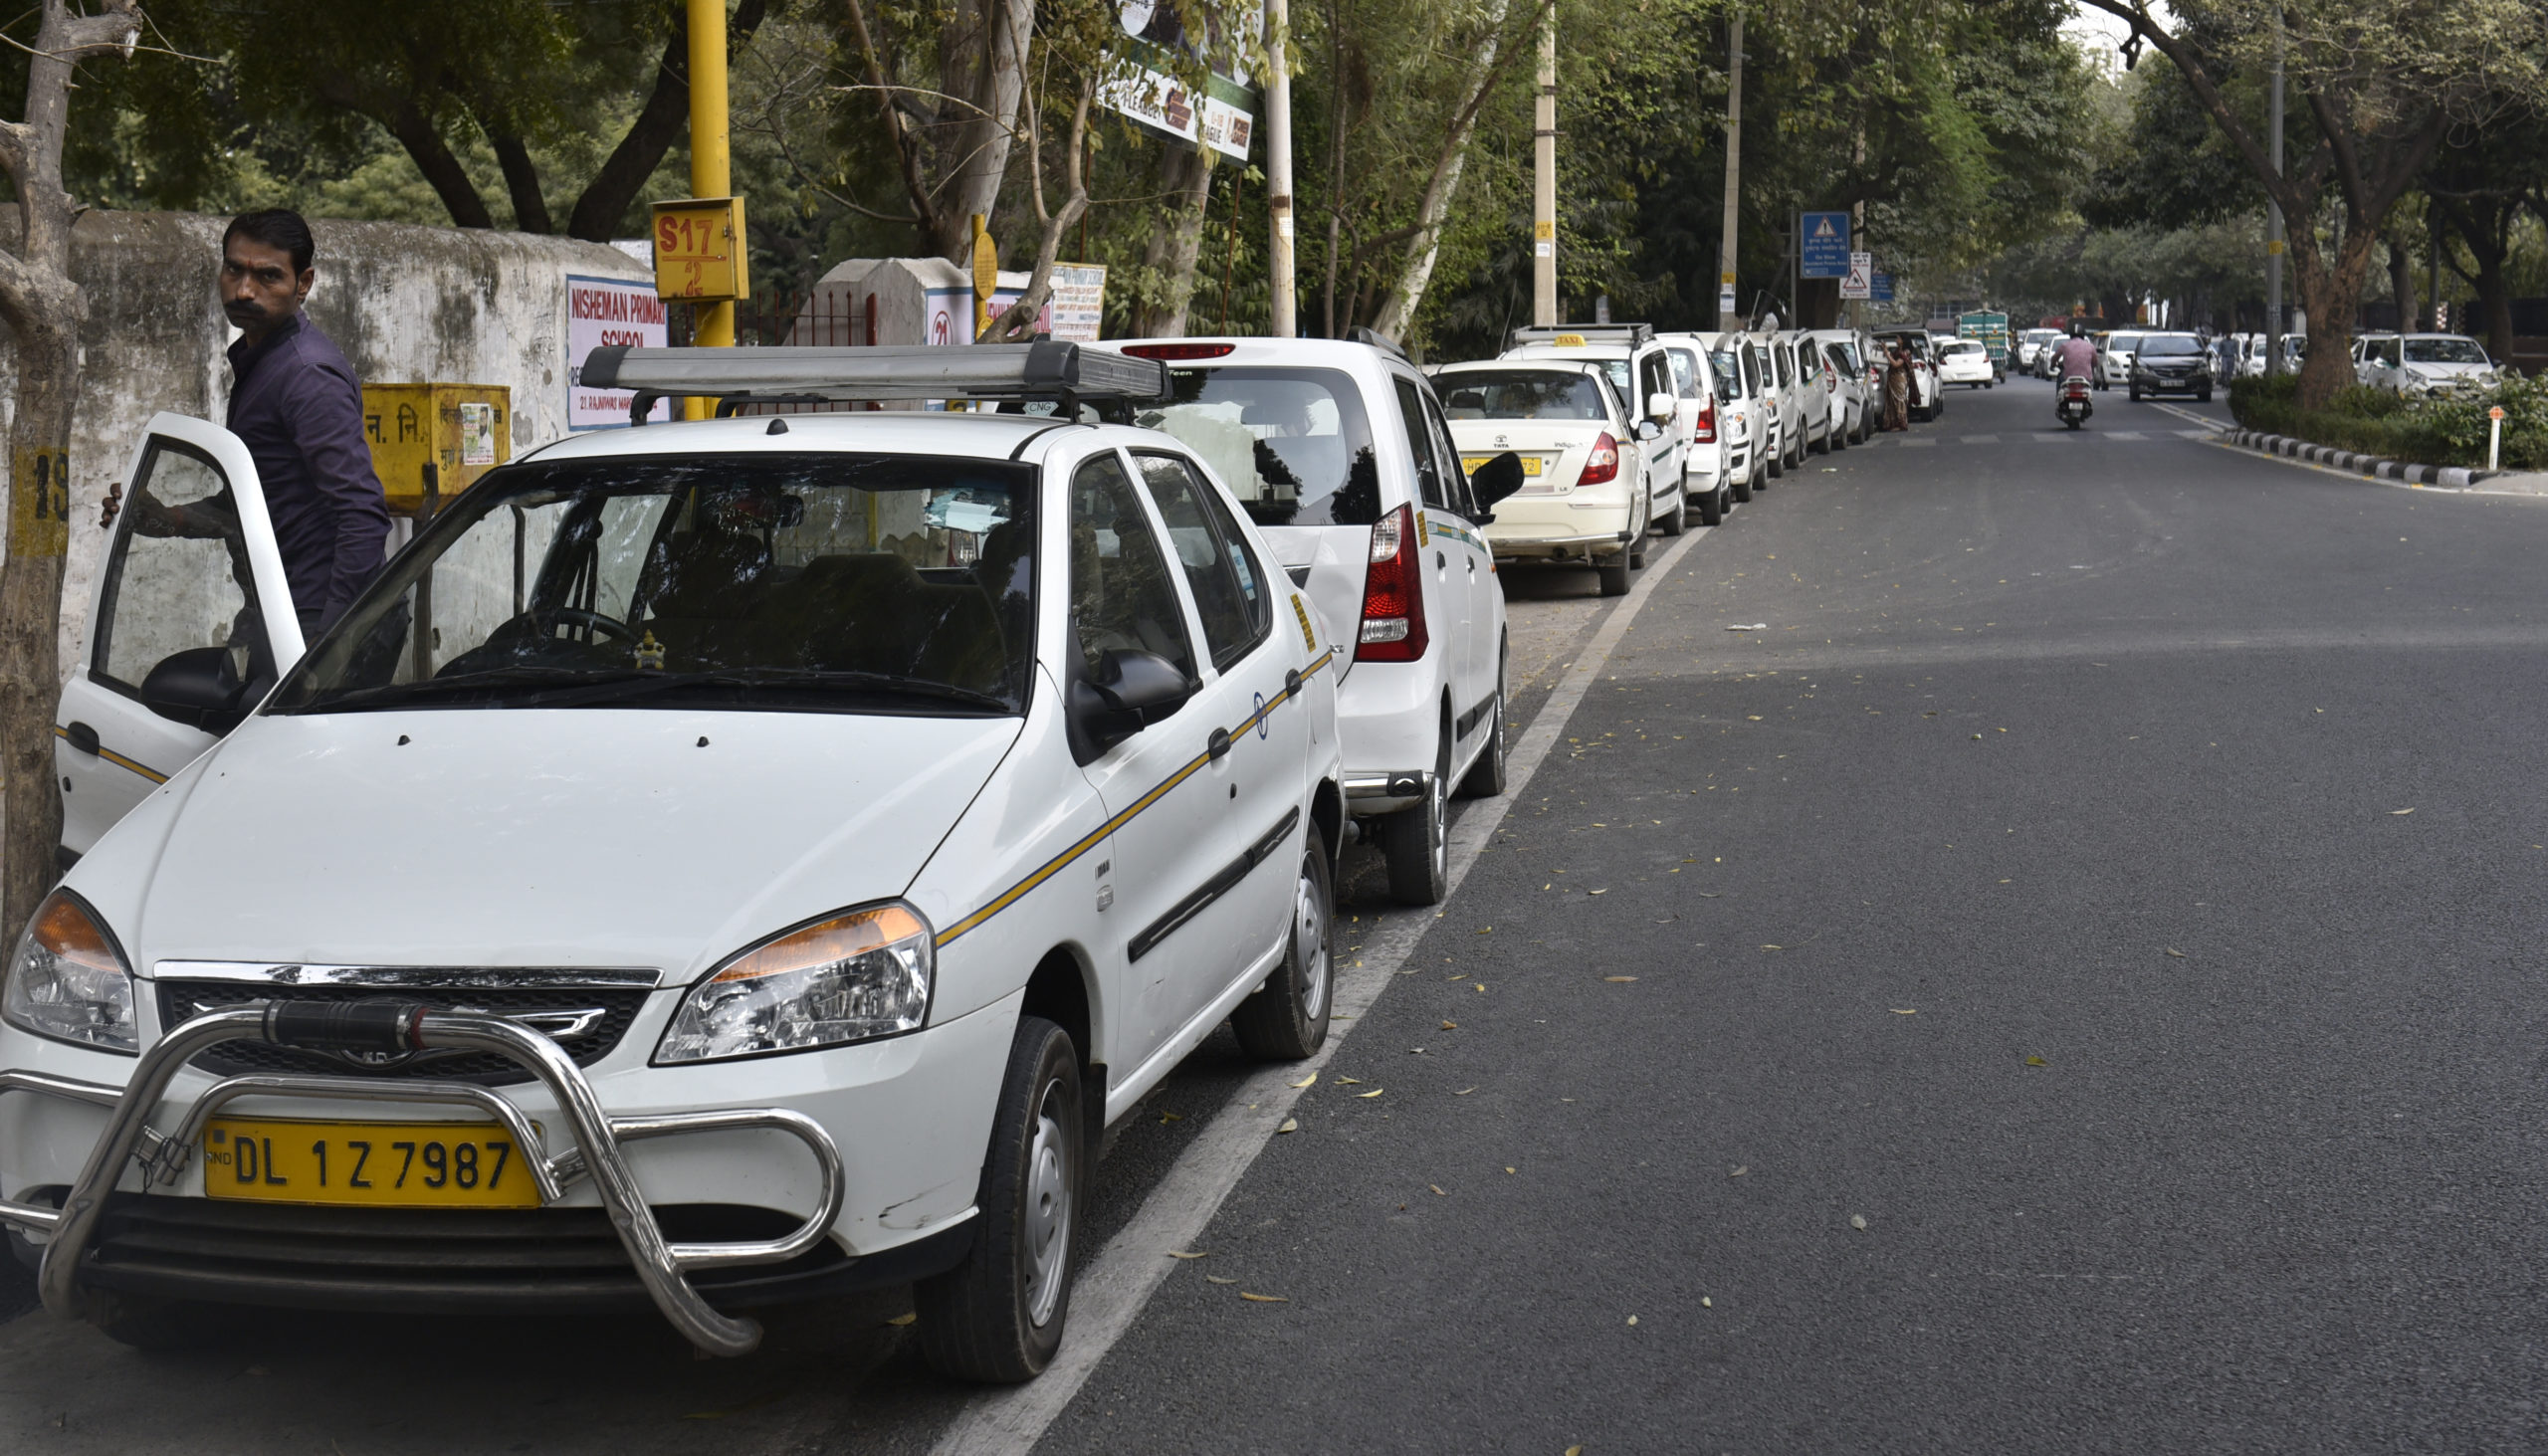 SDMC to start multilevel stack parking in south Delhi’s Adhchini village